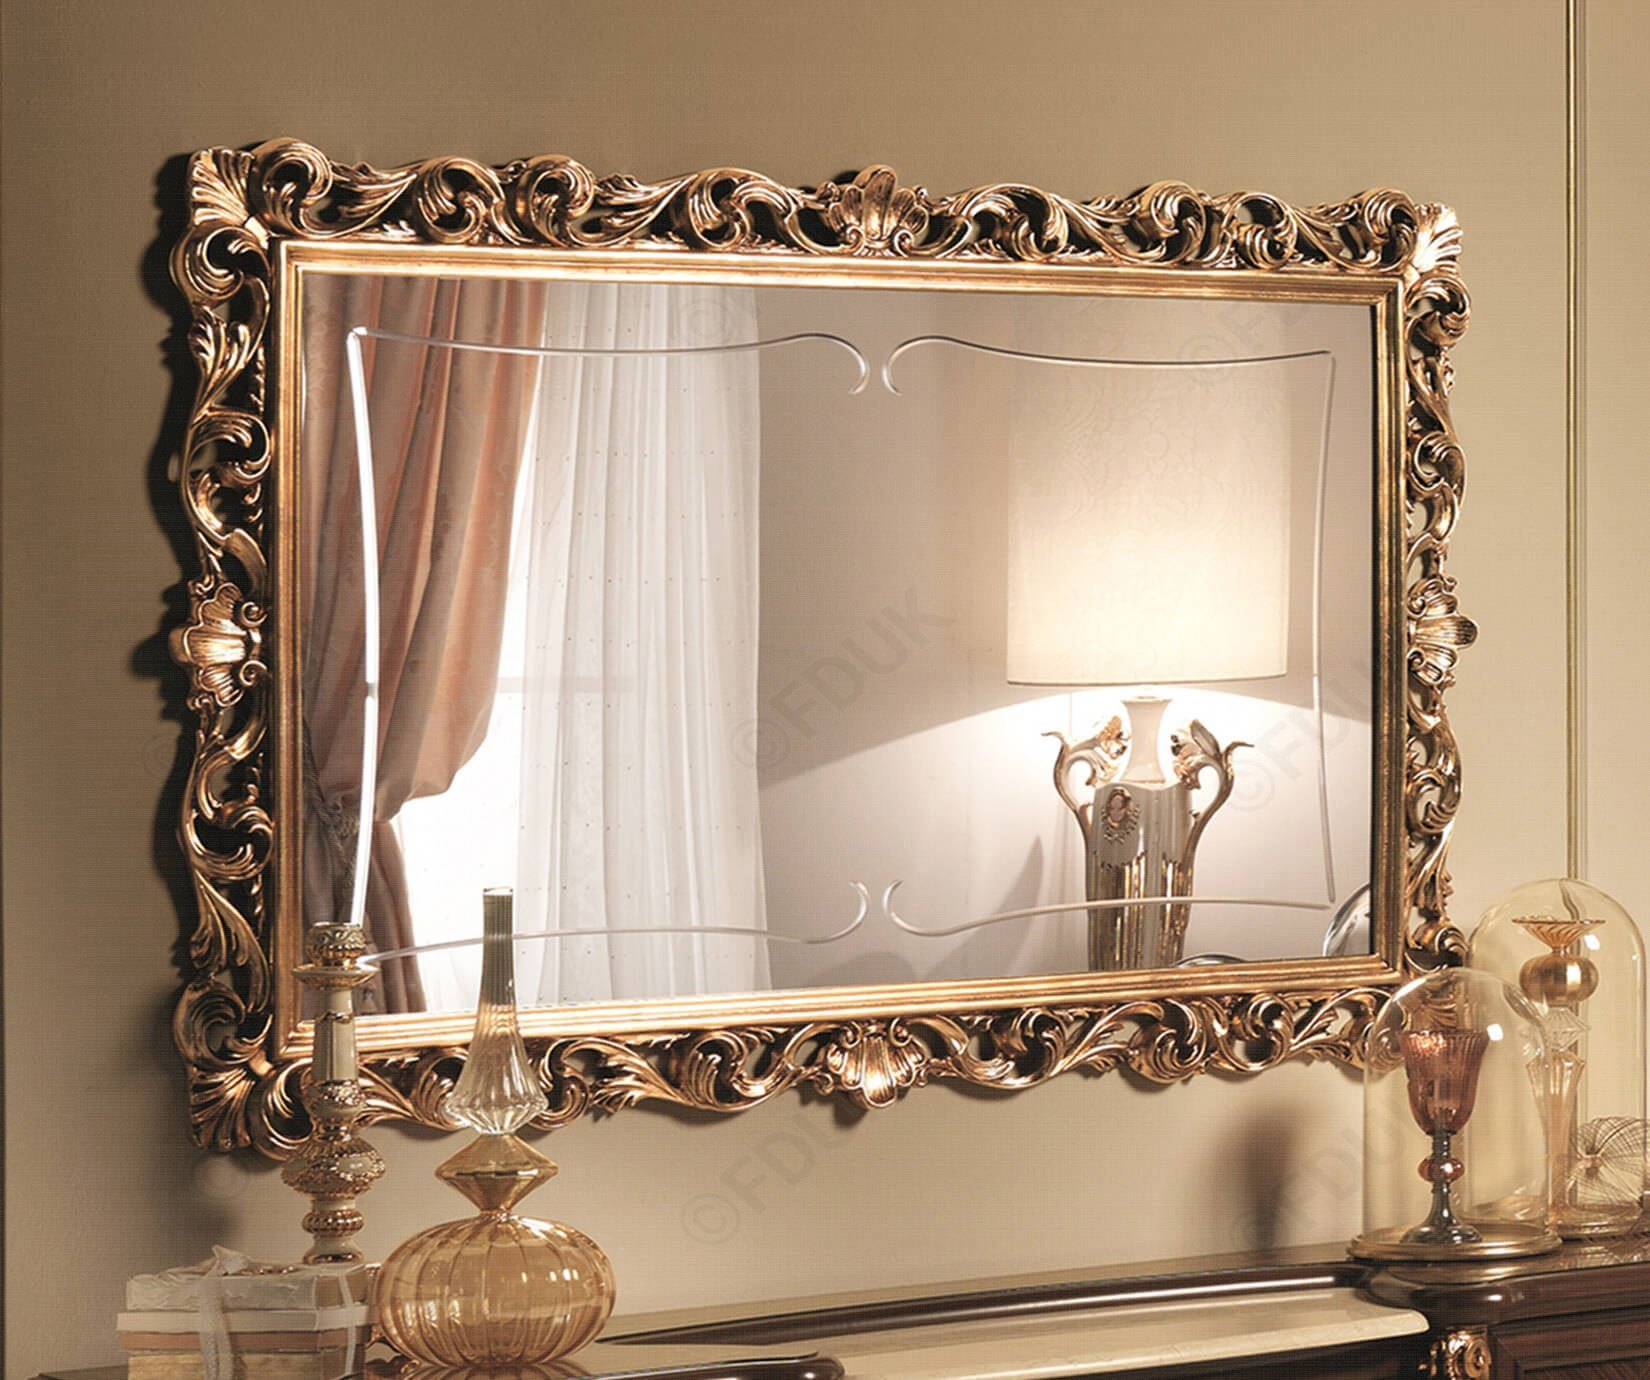 Зеркало gold. Зеркало Carved MK-3206-ce. «Золотое зеркало» Вилланд. Arredo Classic poesia зеркало. Спальня arredo Classic Sinfonia.